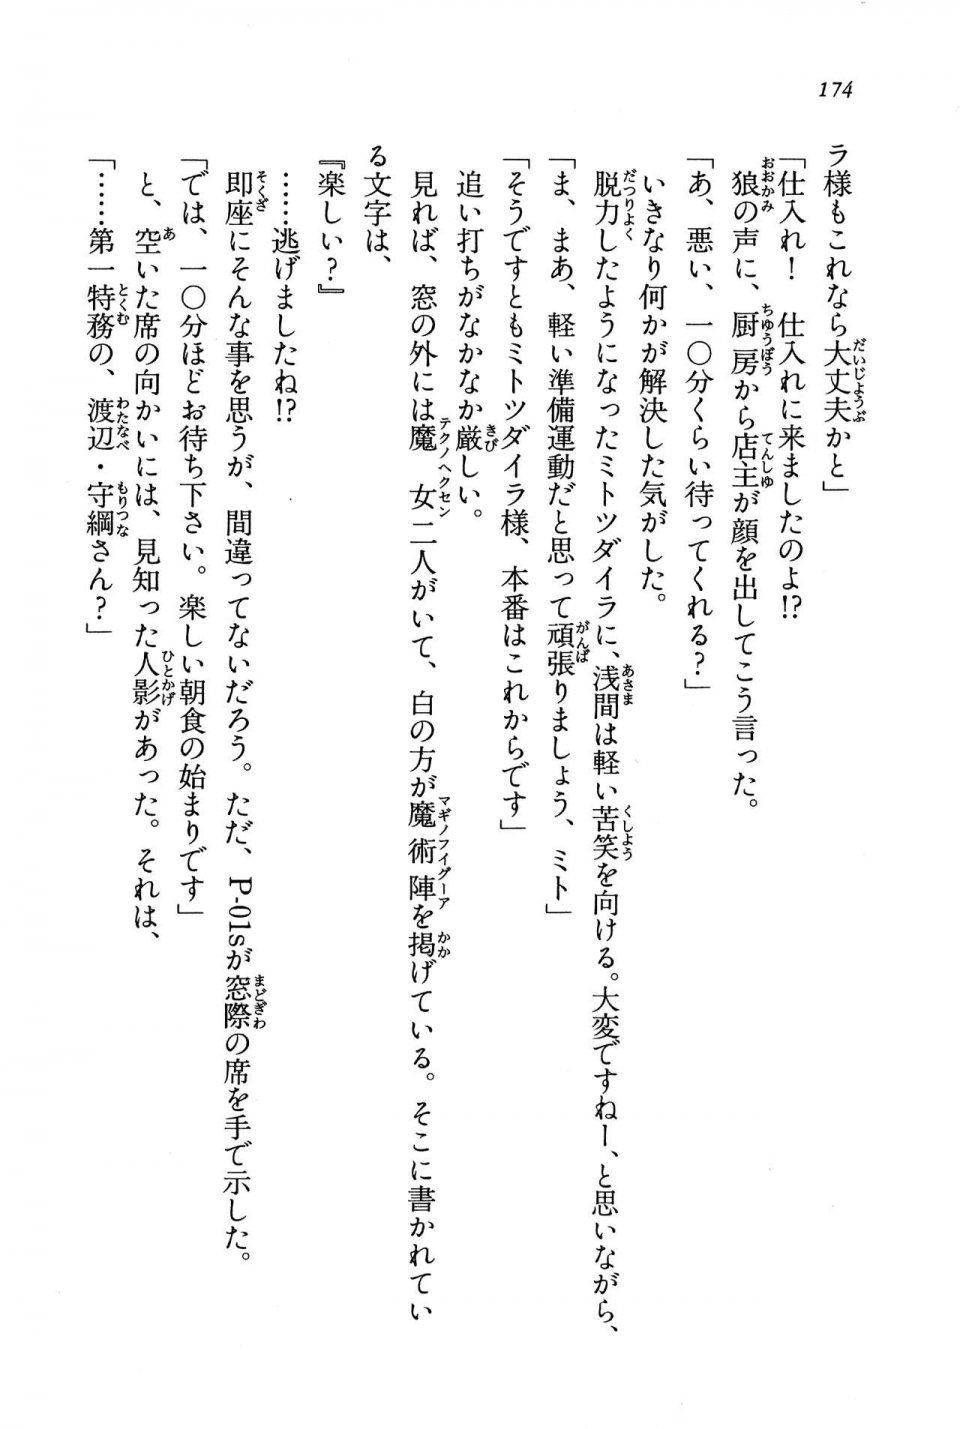 Kyoukai Senjou no Horizon BD Special Mininovel Vol 8(4B) - Photo #178